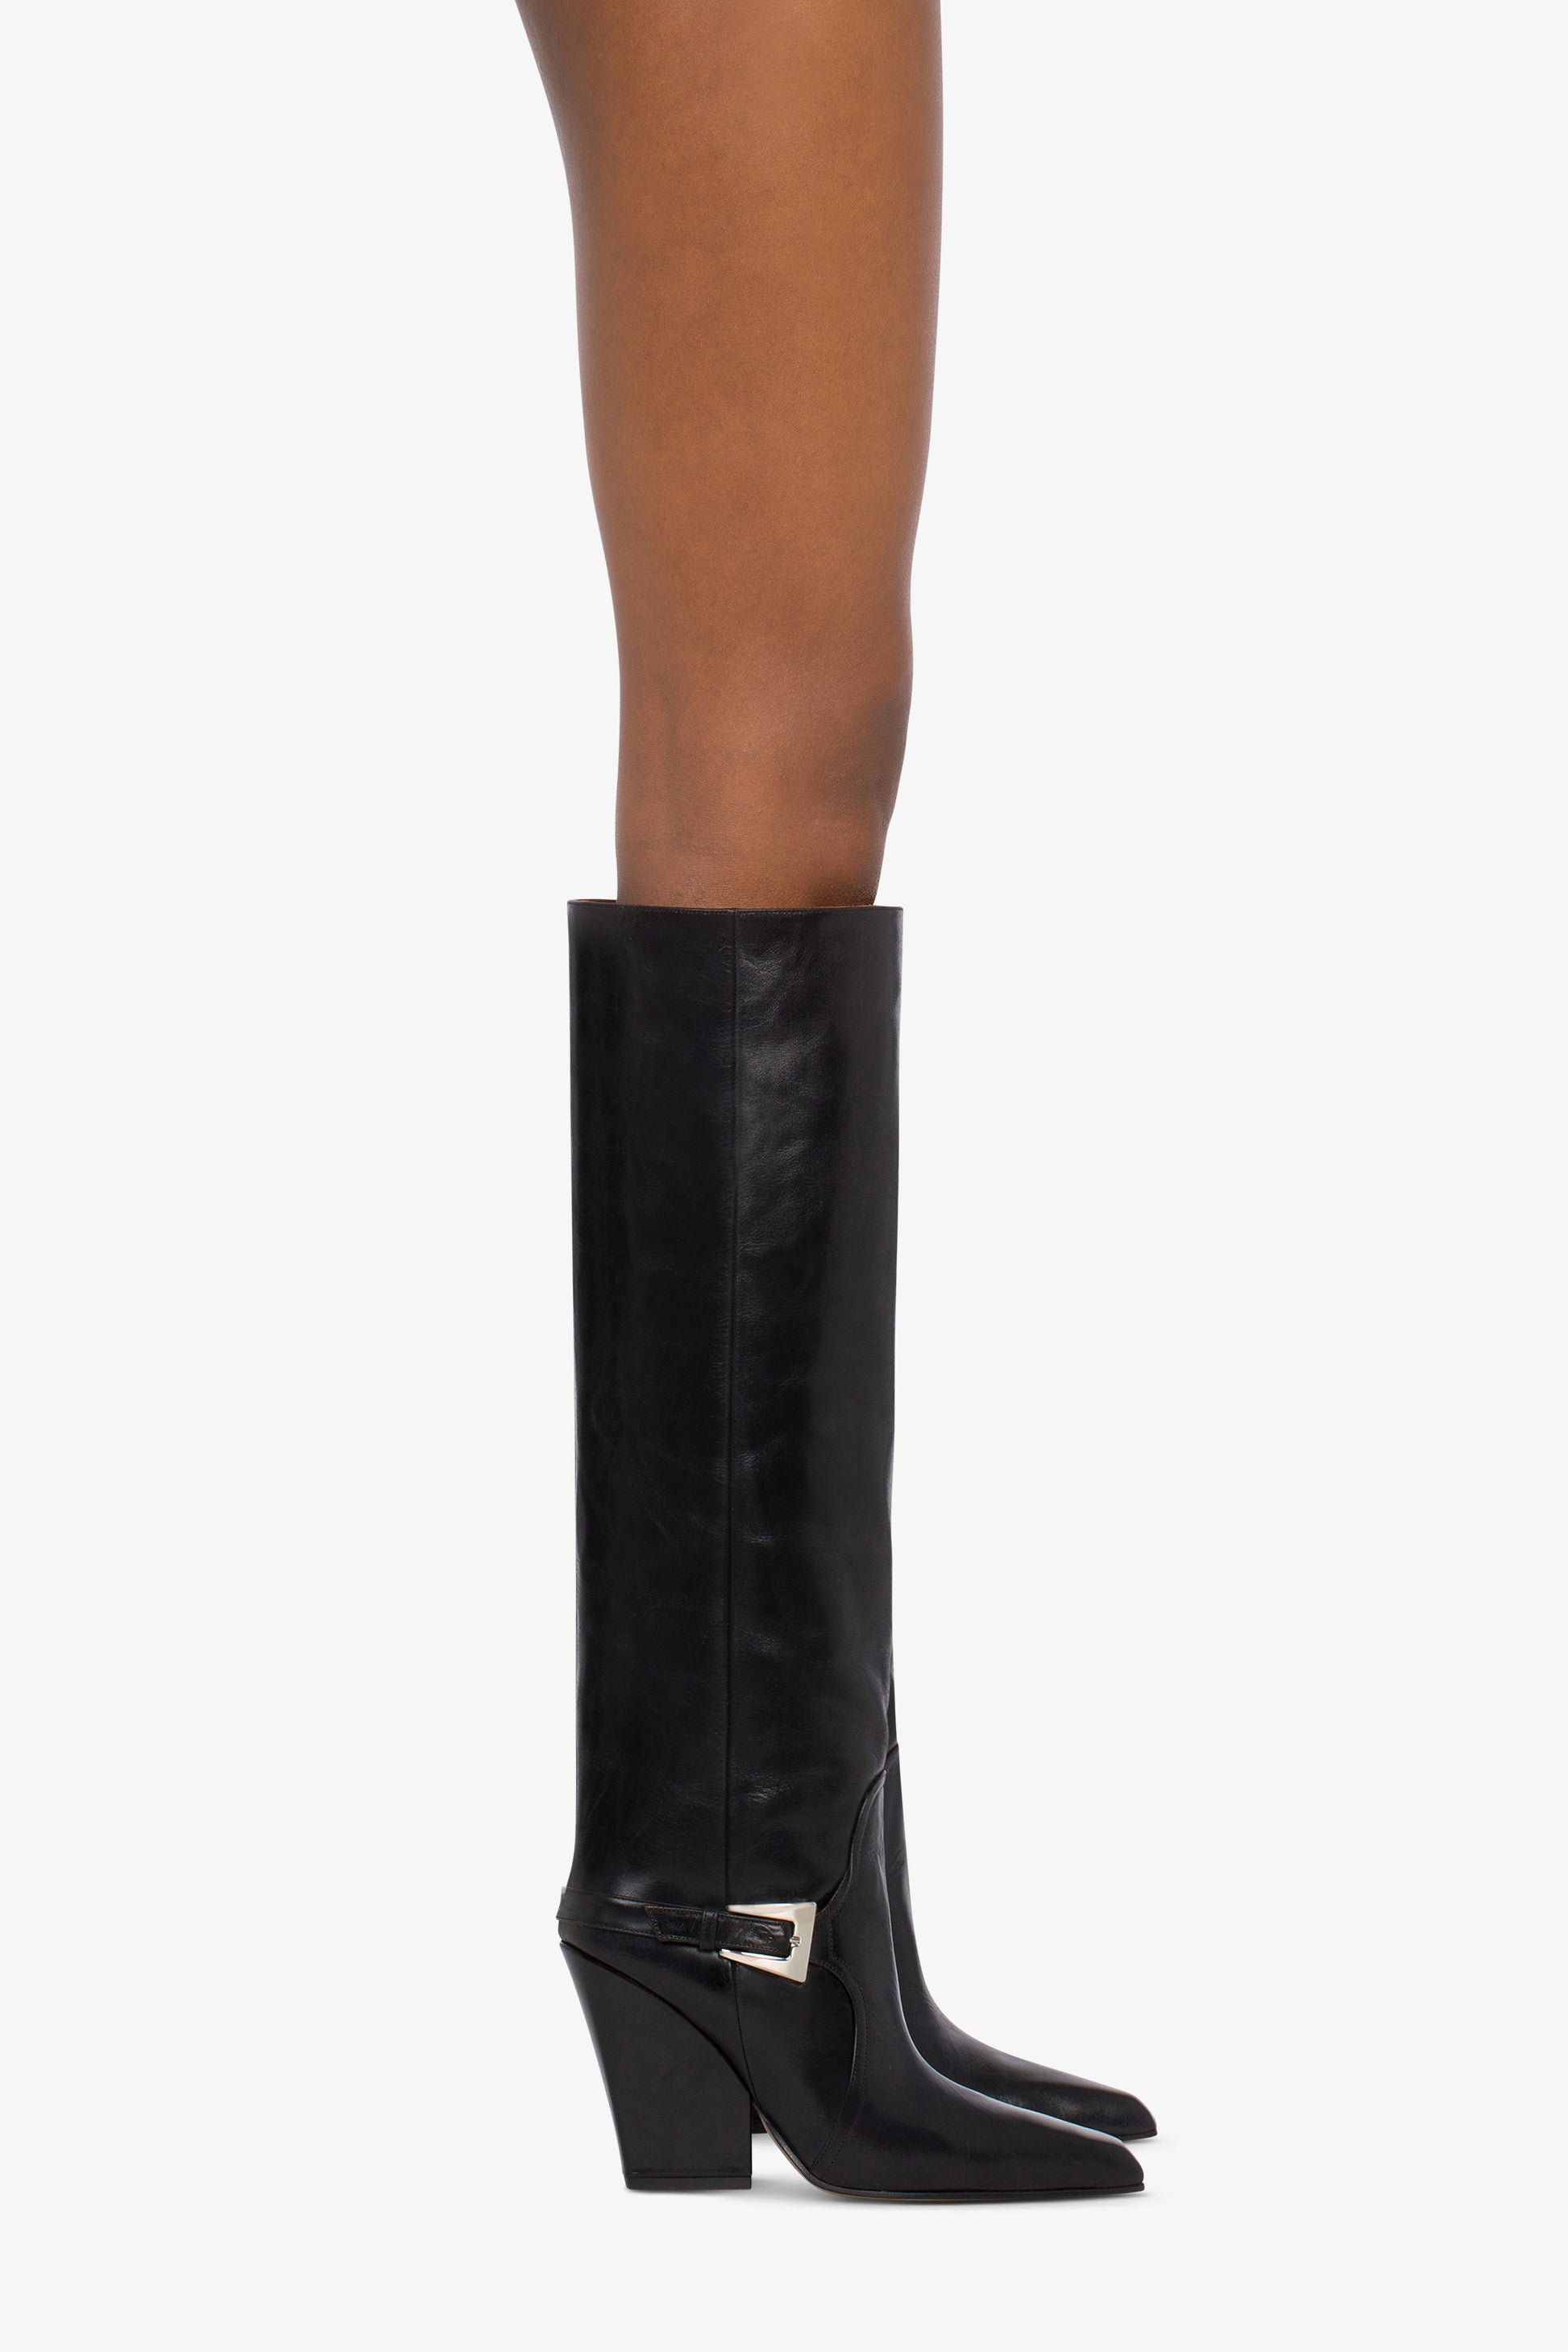 Tall, knee-high boots in shiny black vintage leather - Produkt getragen